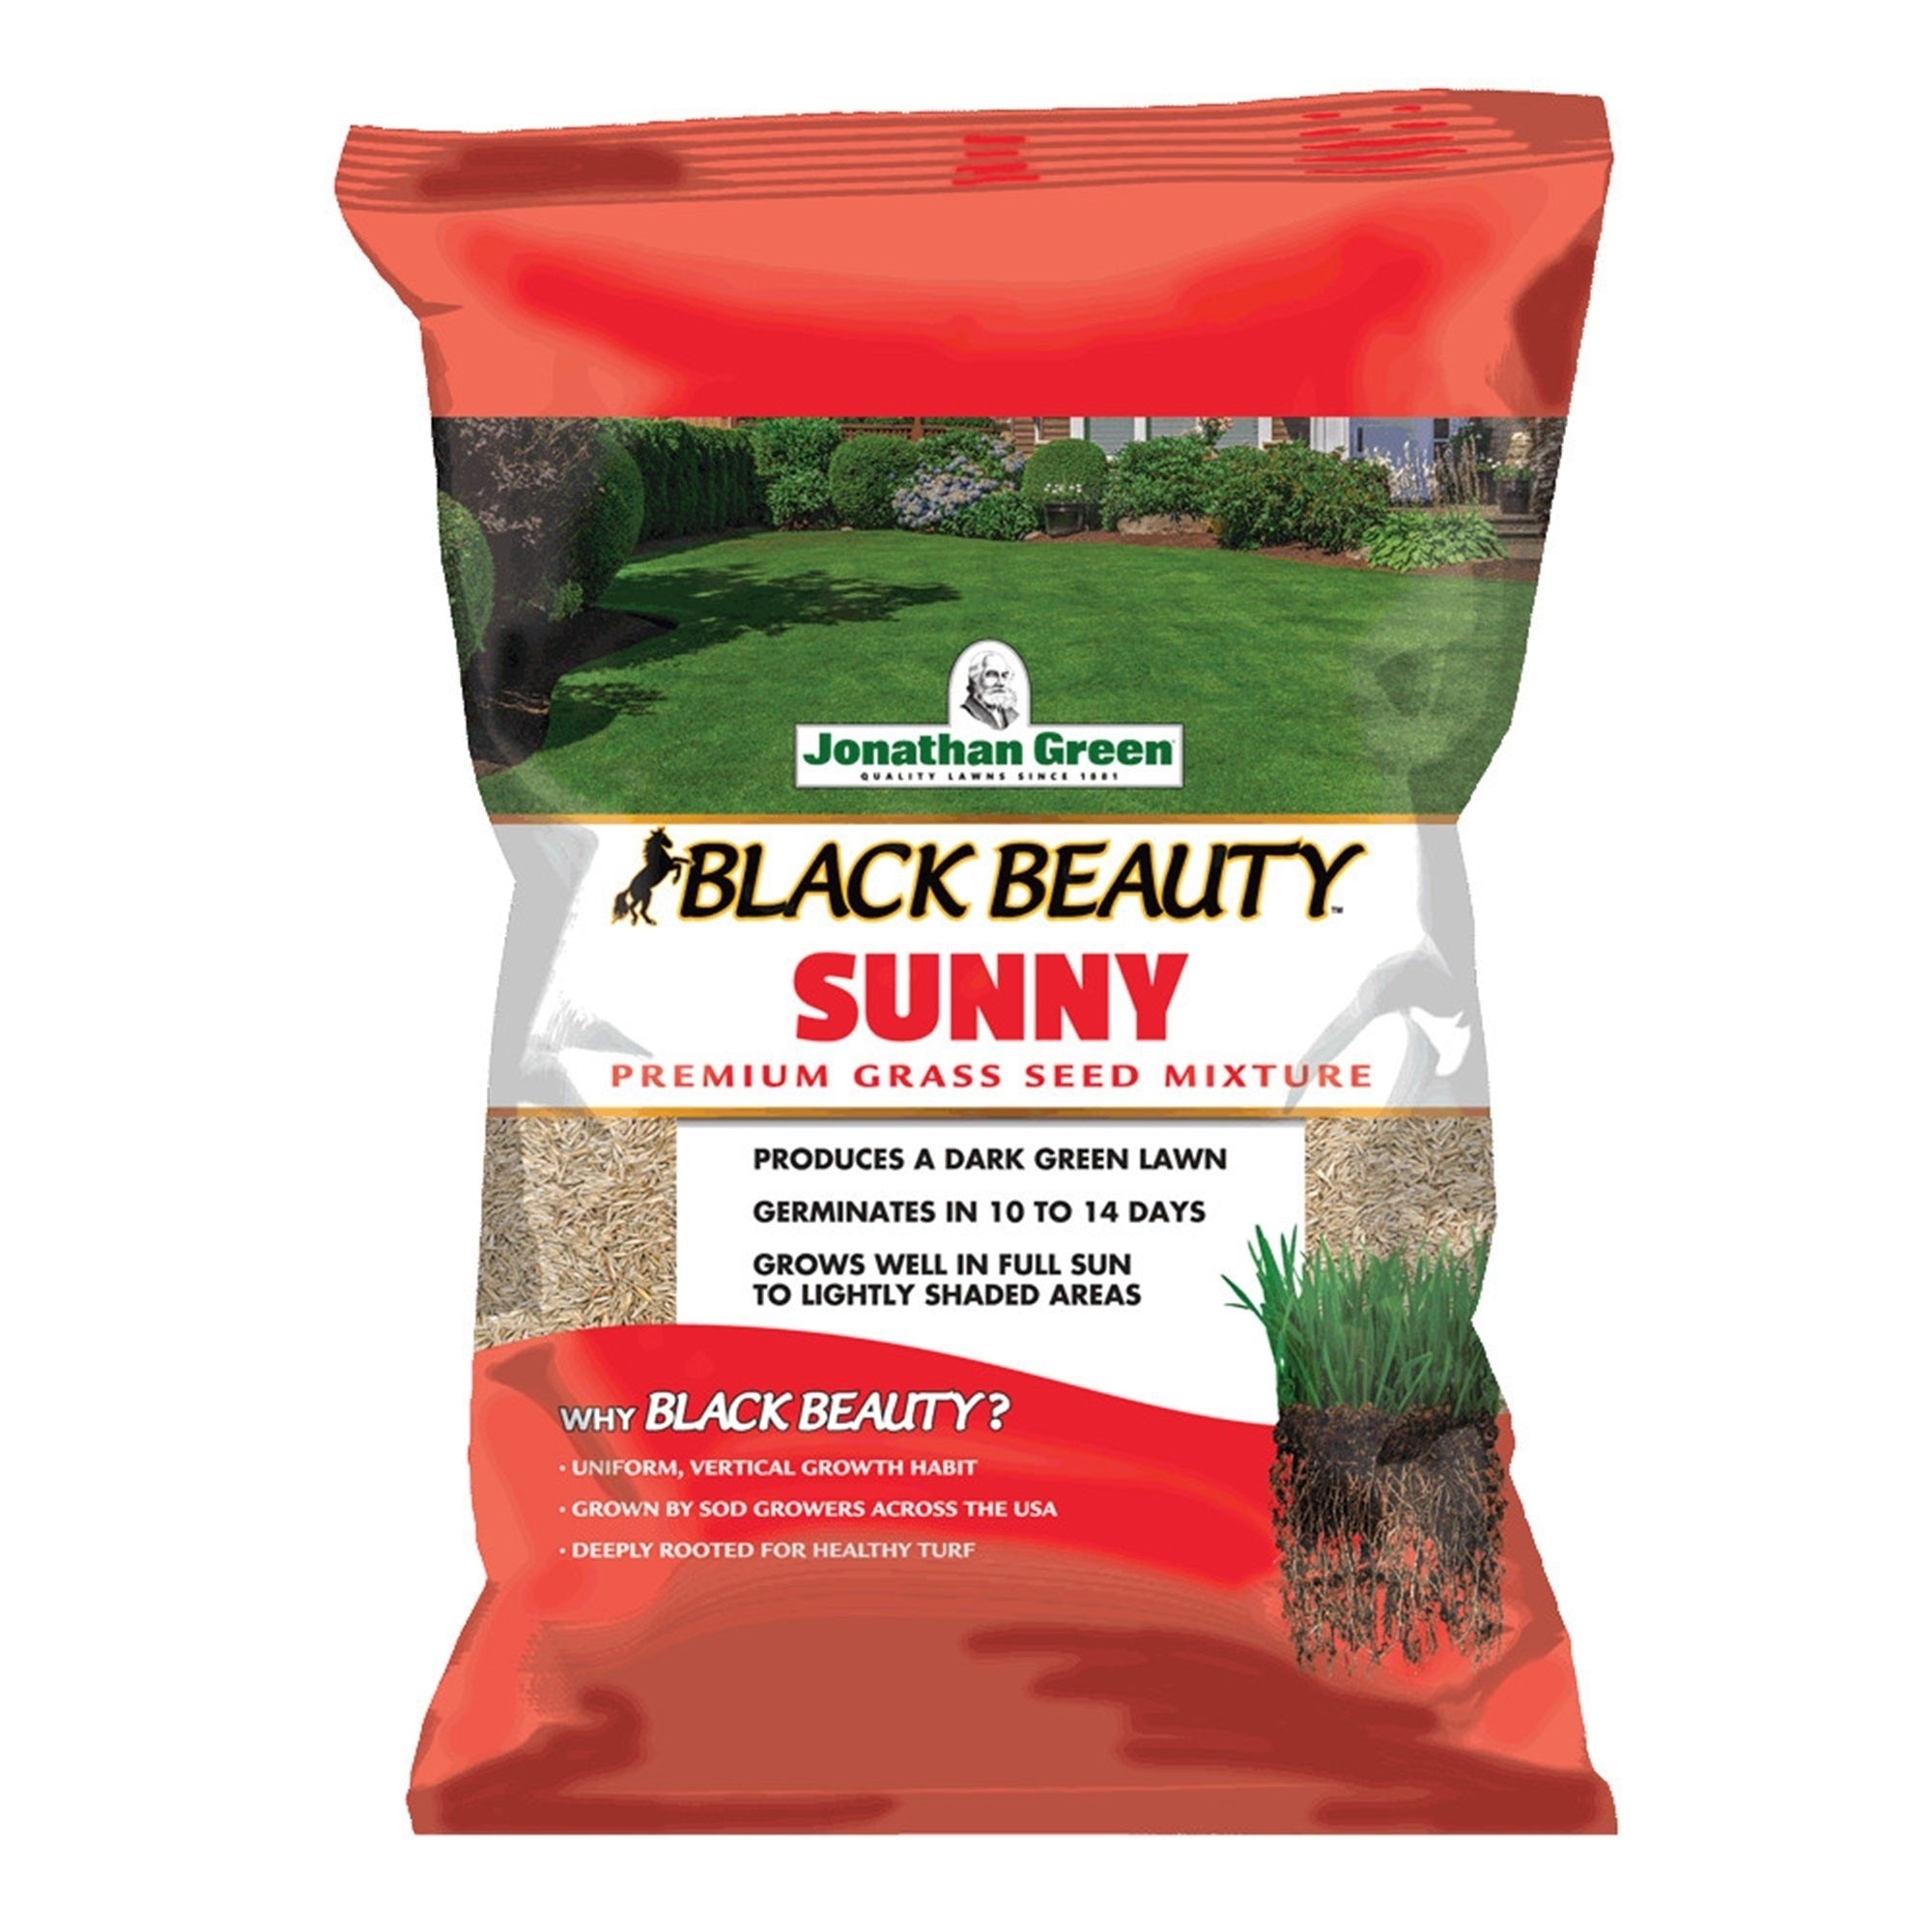 Jonathan Green Black Beauty Sunny Premium Grass Seed Mixture